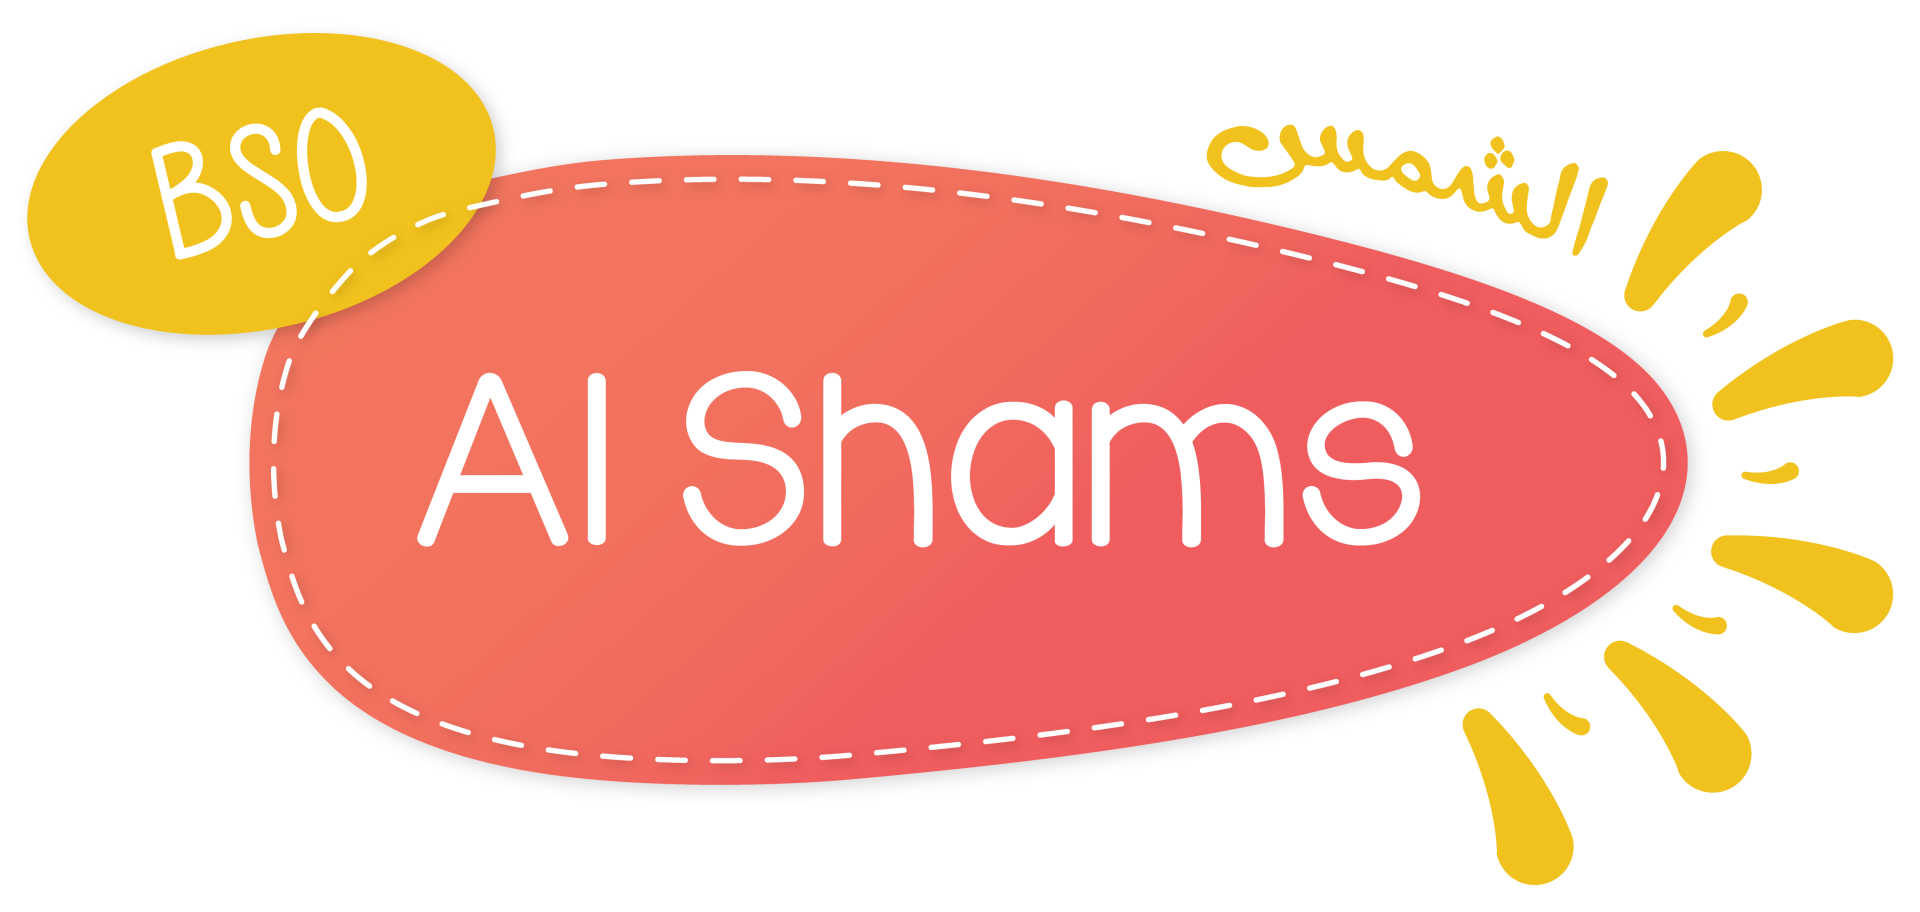 BSO Al Shams logo